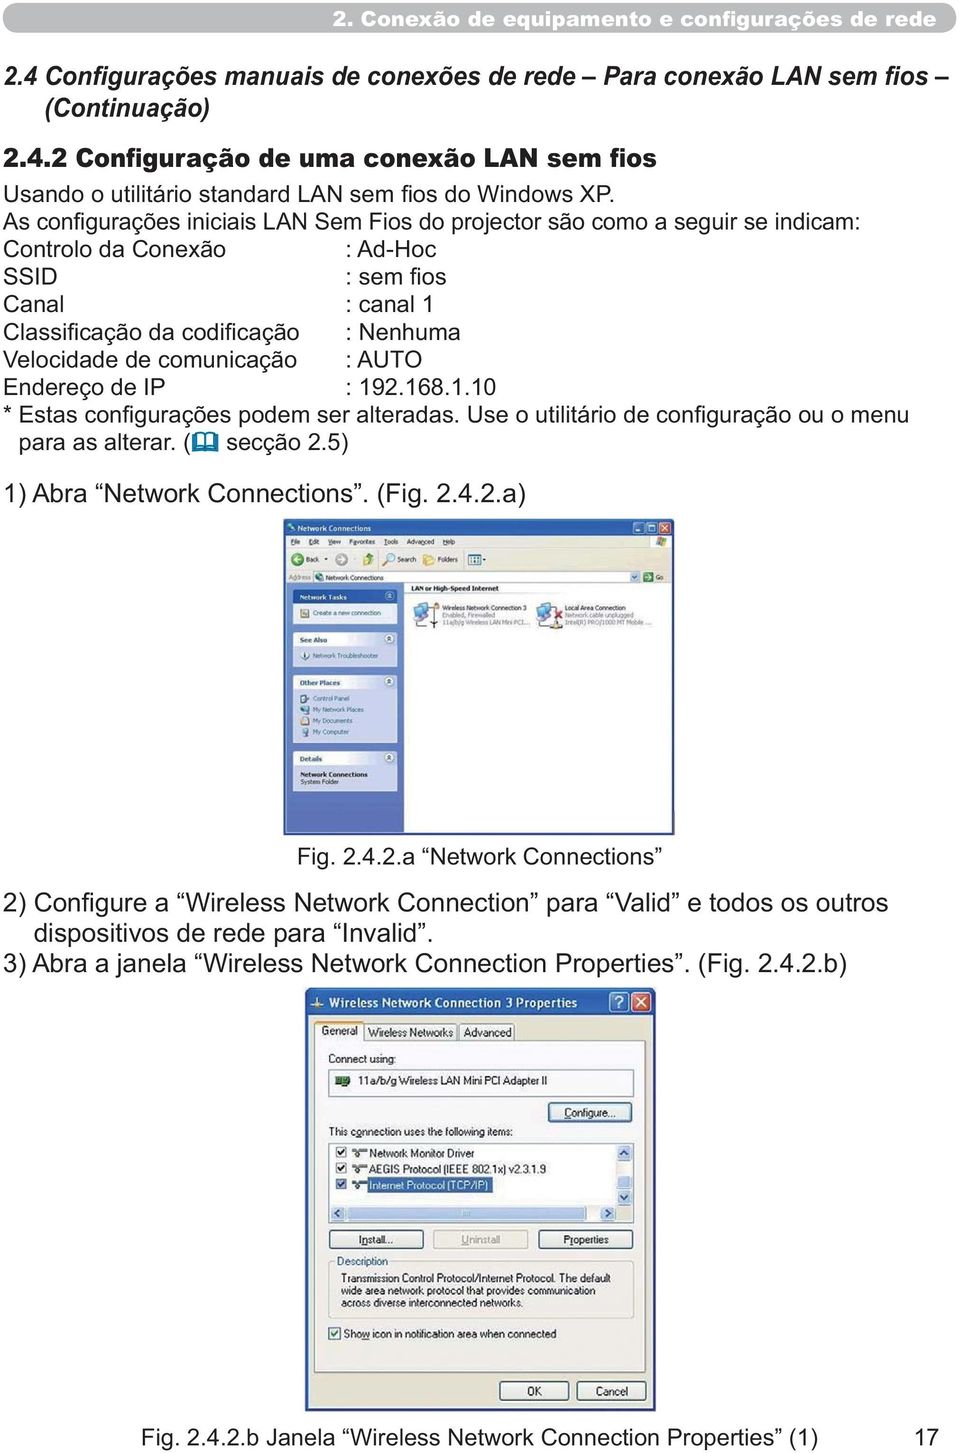 5) Network Connections dispositivos de rede para